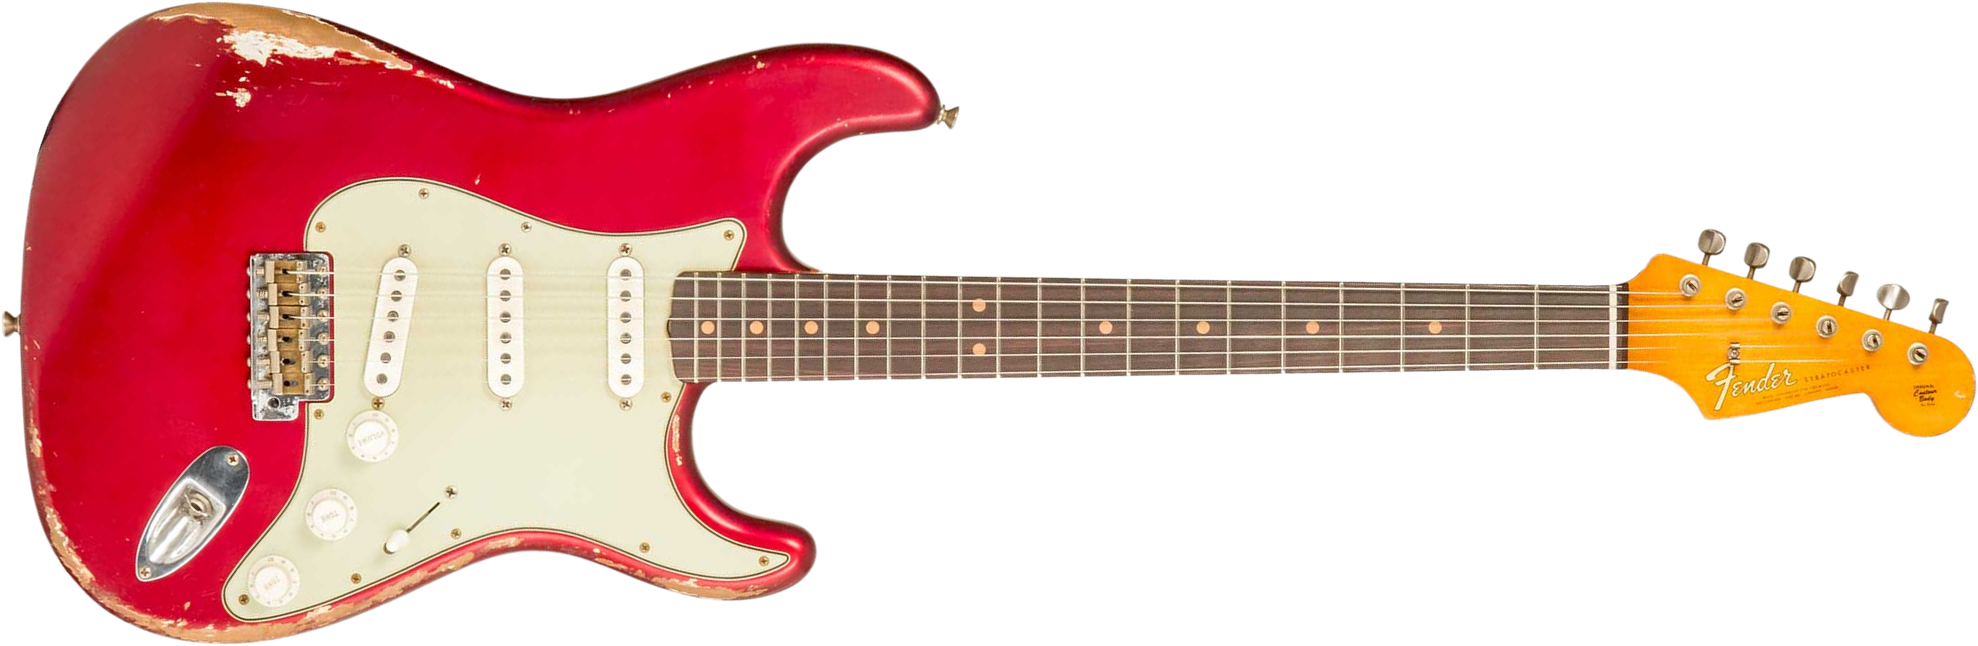 Fender Custom Shop Strat 1964 Masterbuilt P.waller 3s Trem Rw #r129130 - Heavy Relic Candy Apple Red - Str shape electric guitar - Main picture